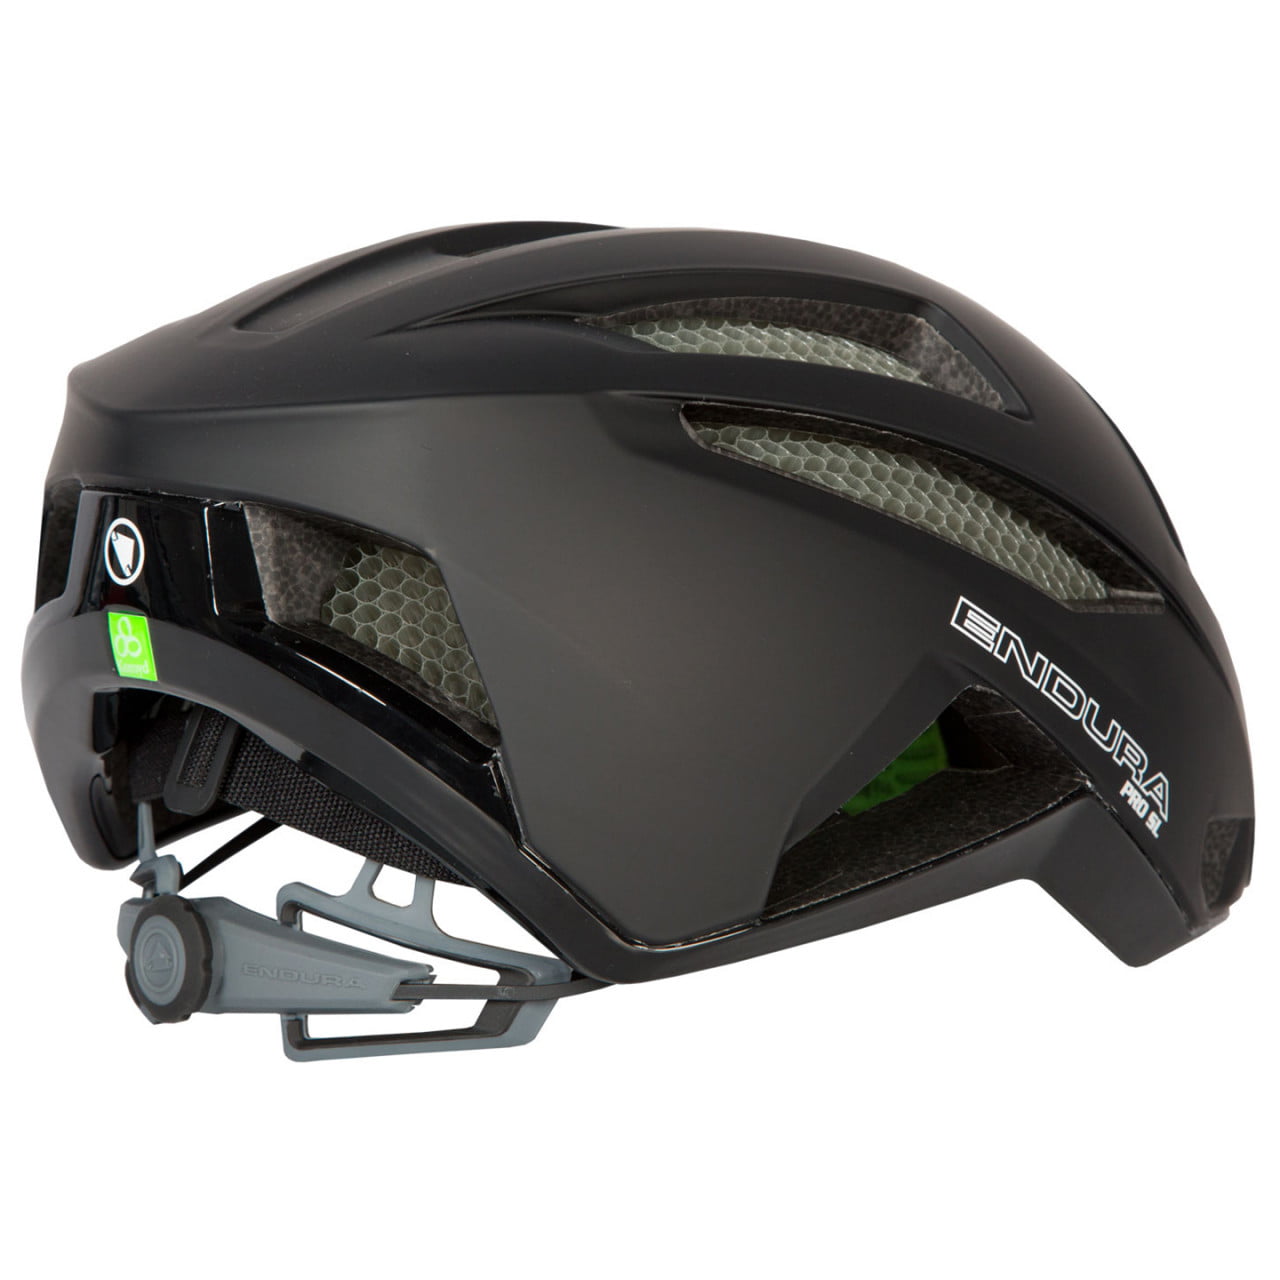 Pro SL Road Bike Helmet